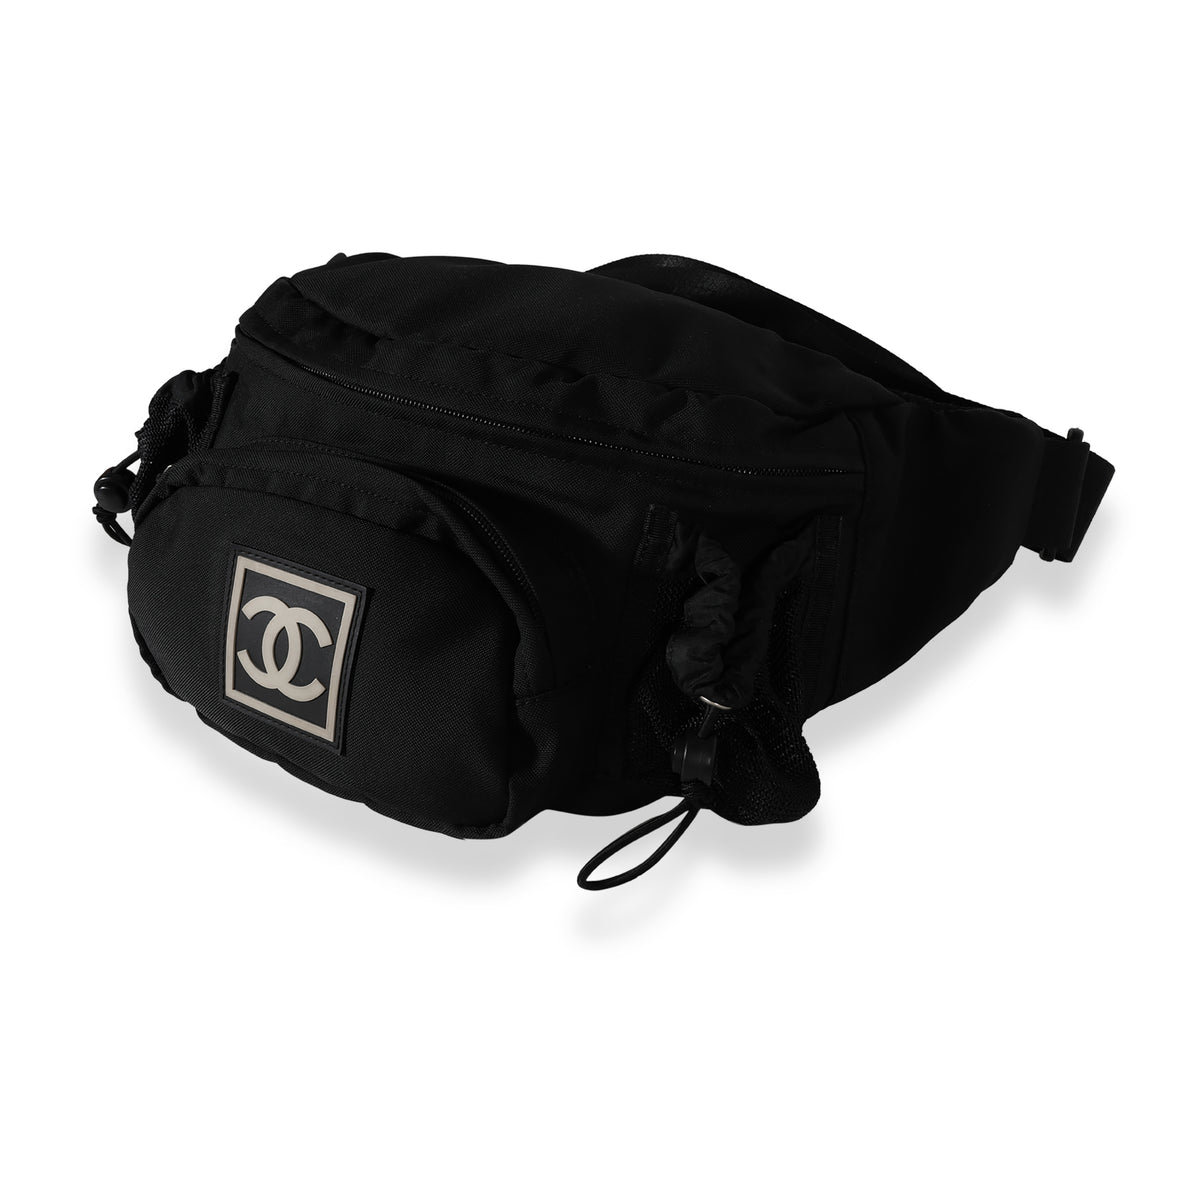 Chanel Sportline Coco Waist Pack Sling Bag Nylon Black A29847 Free Shipping